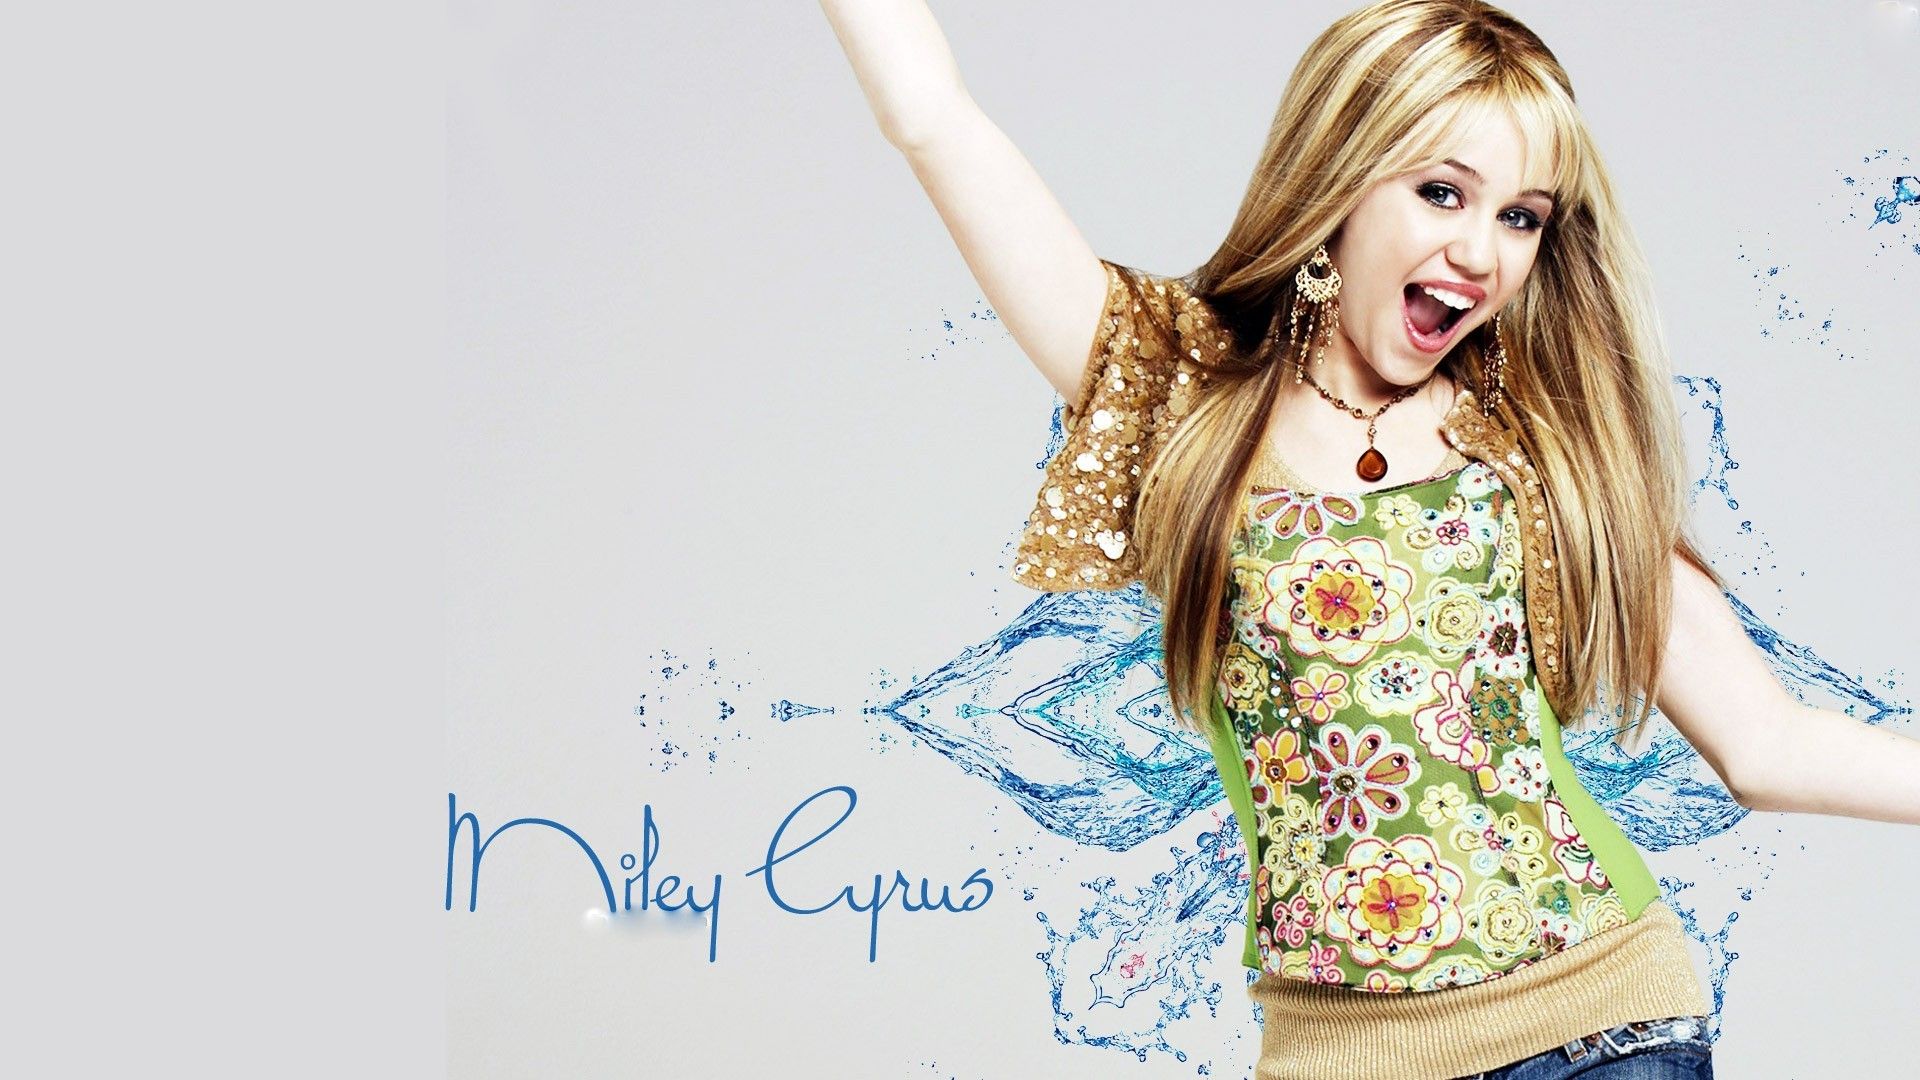 Miley Cyrus HD Wallpaper Beautiful Photos American Singer Image